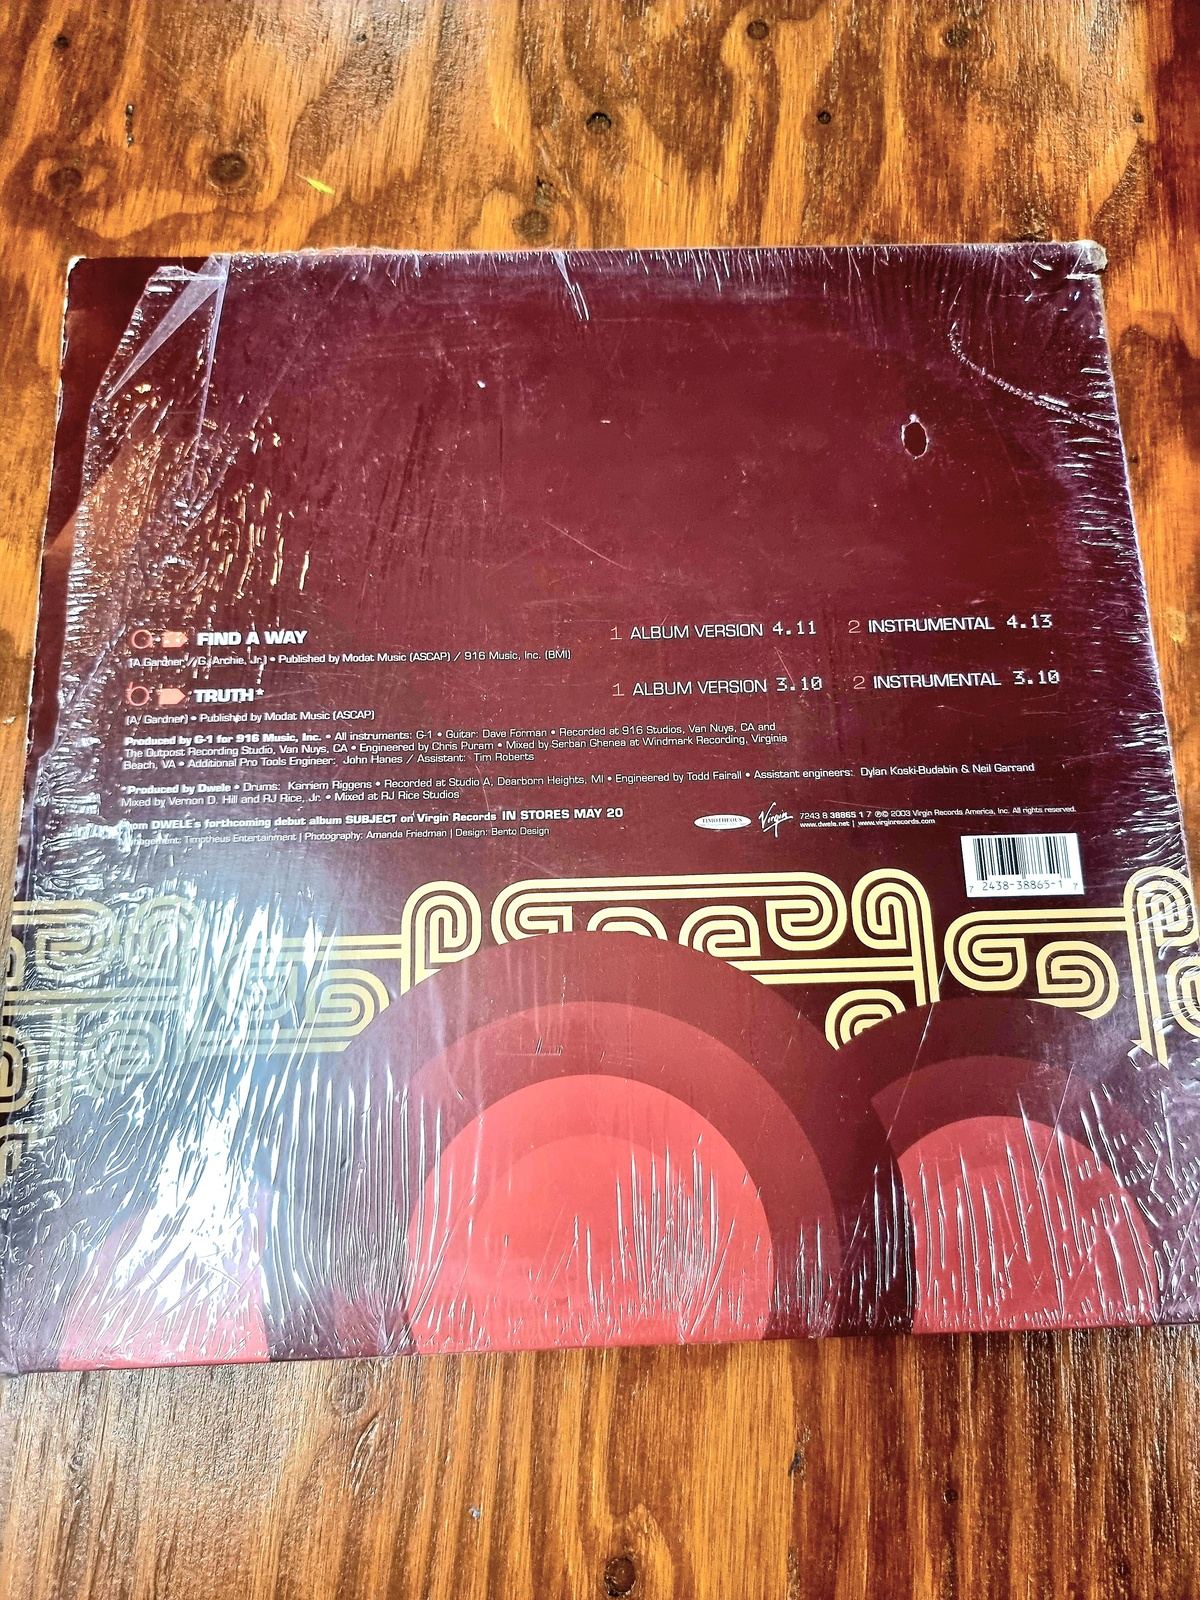 Dwele Vinyl Record – Find A Way